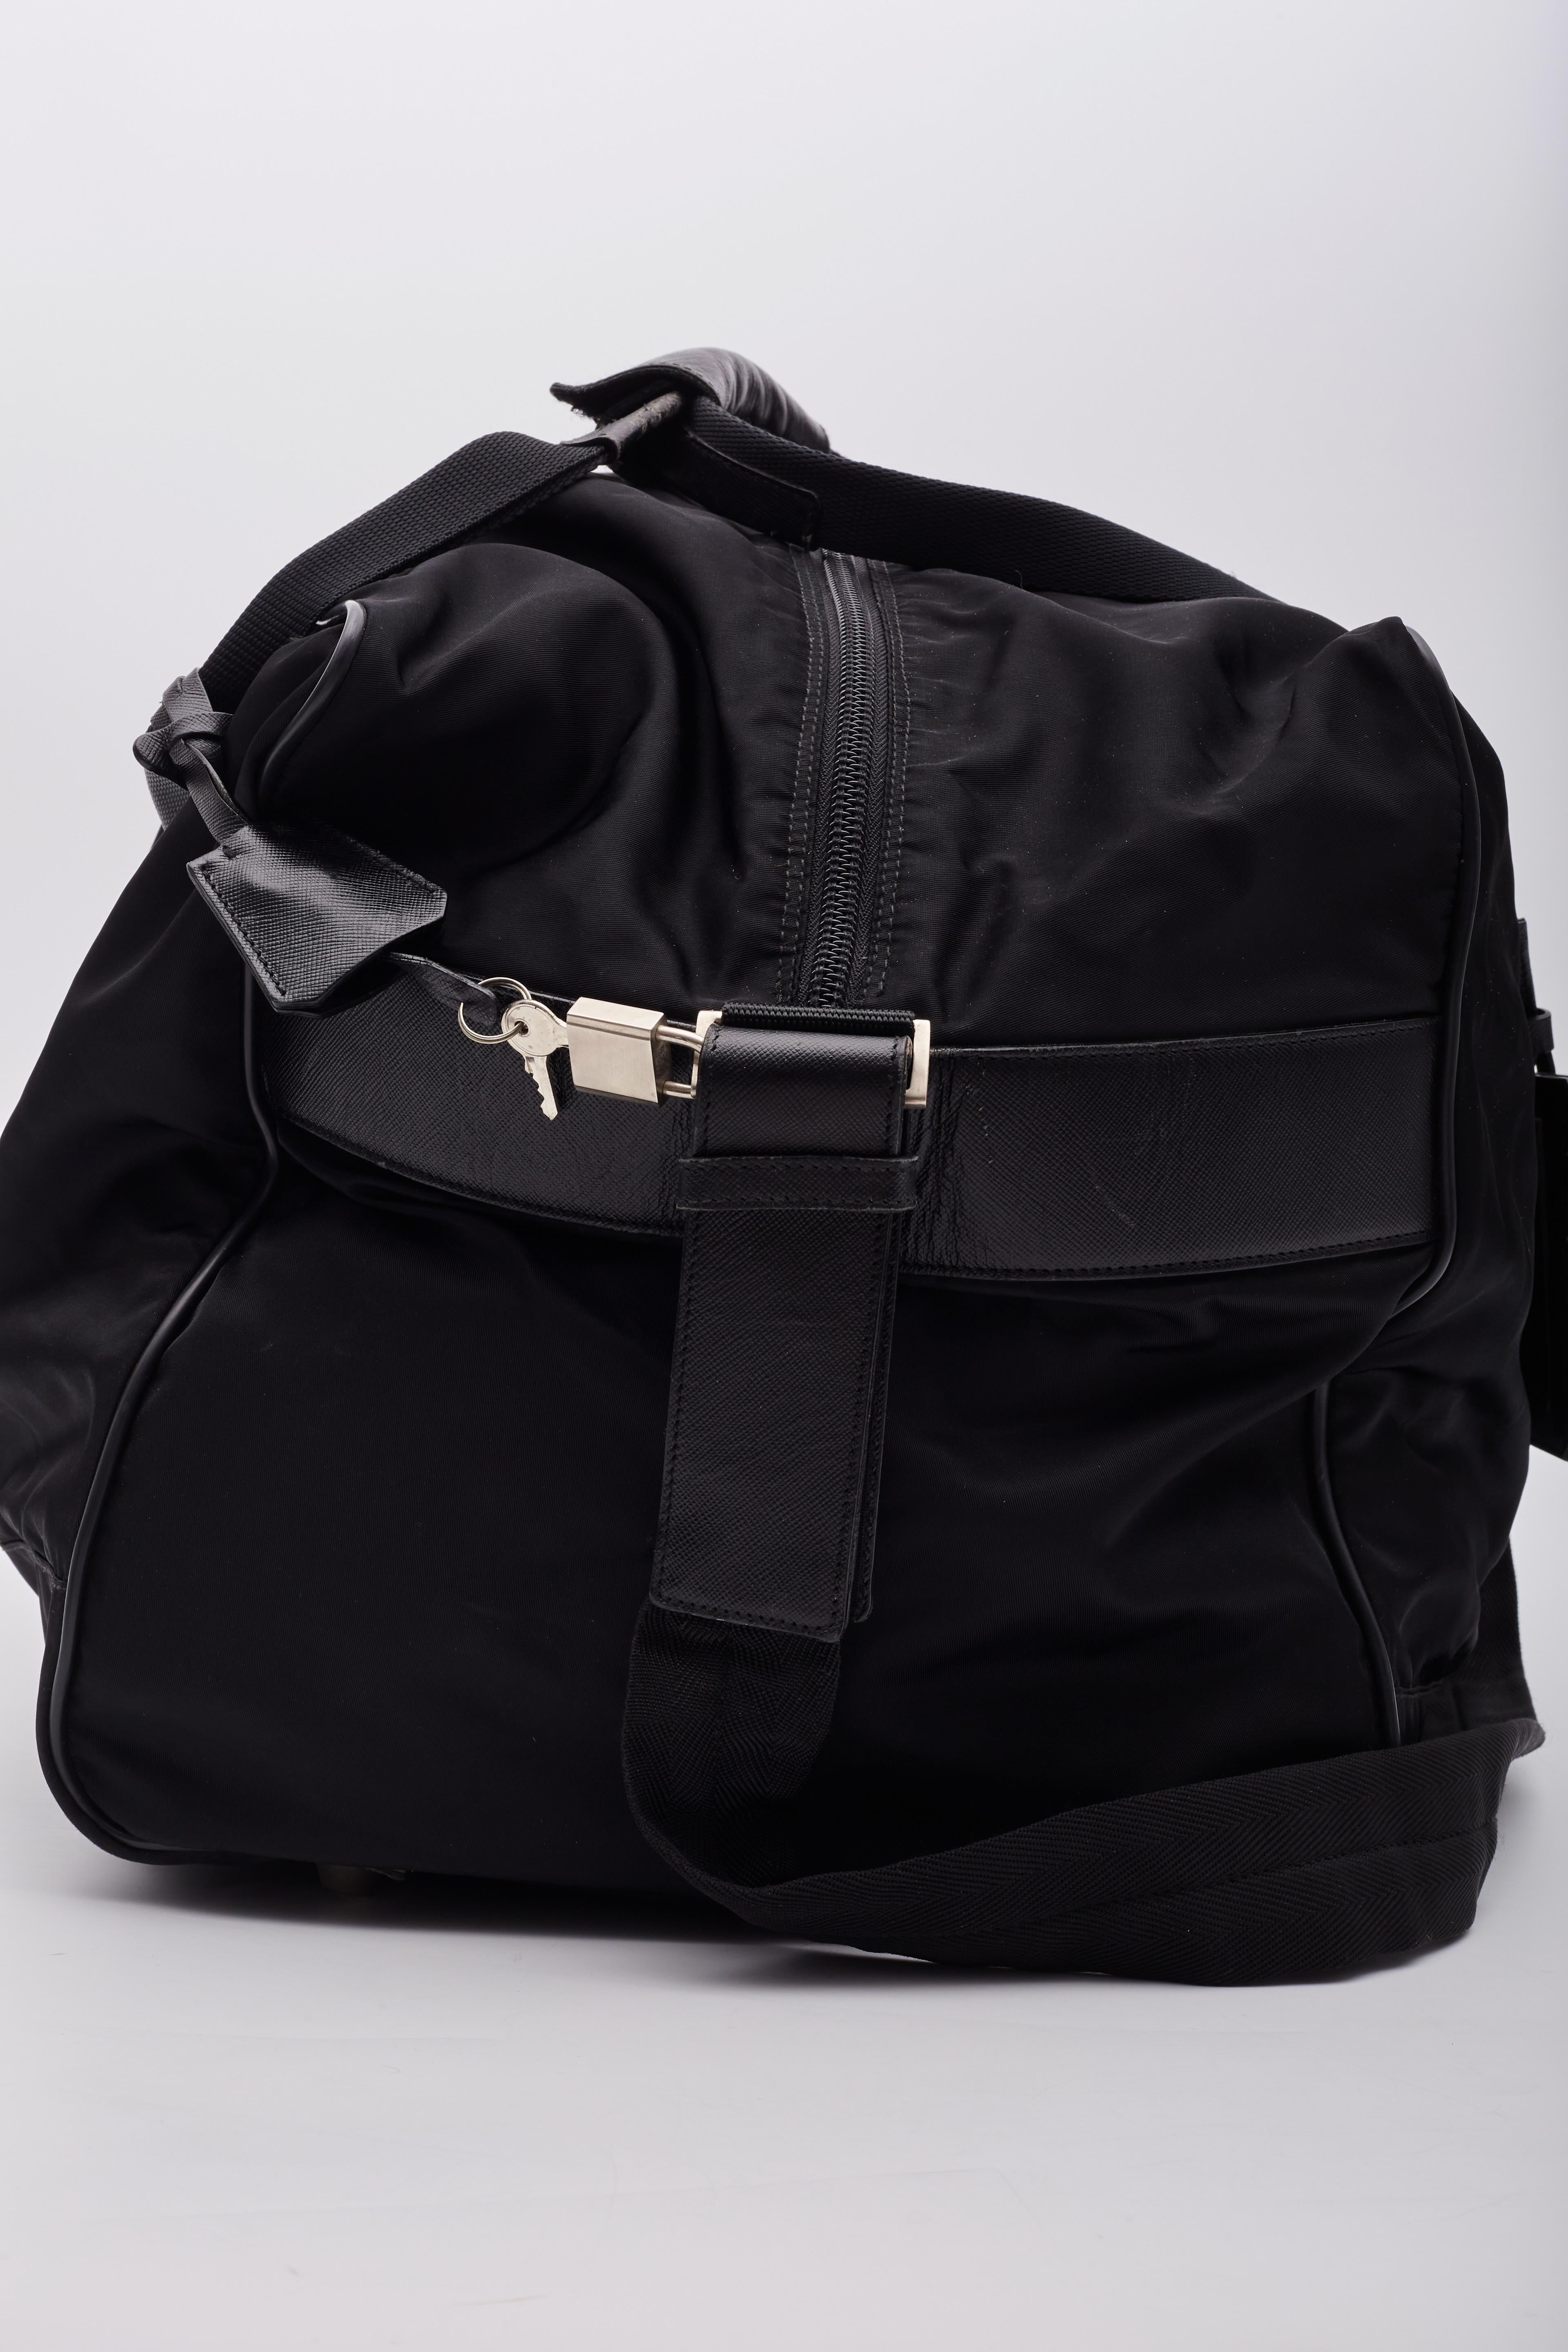 Prada Black Nylon Duffle Sports Weekender Bag For Sale 2